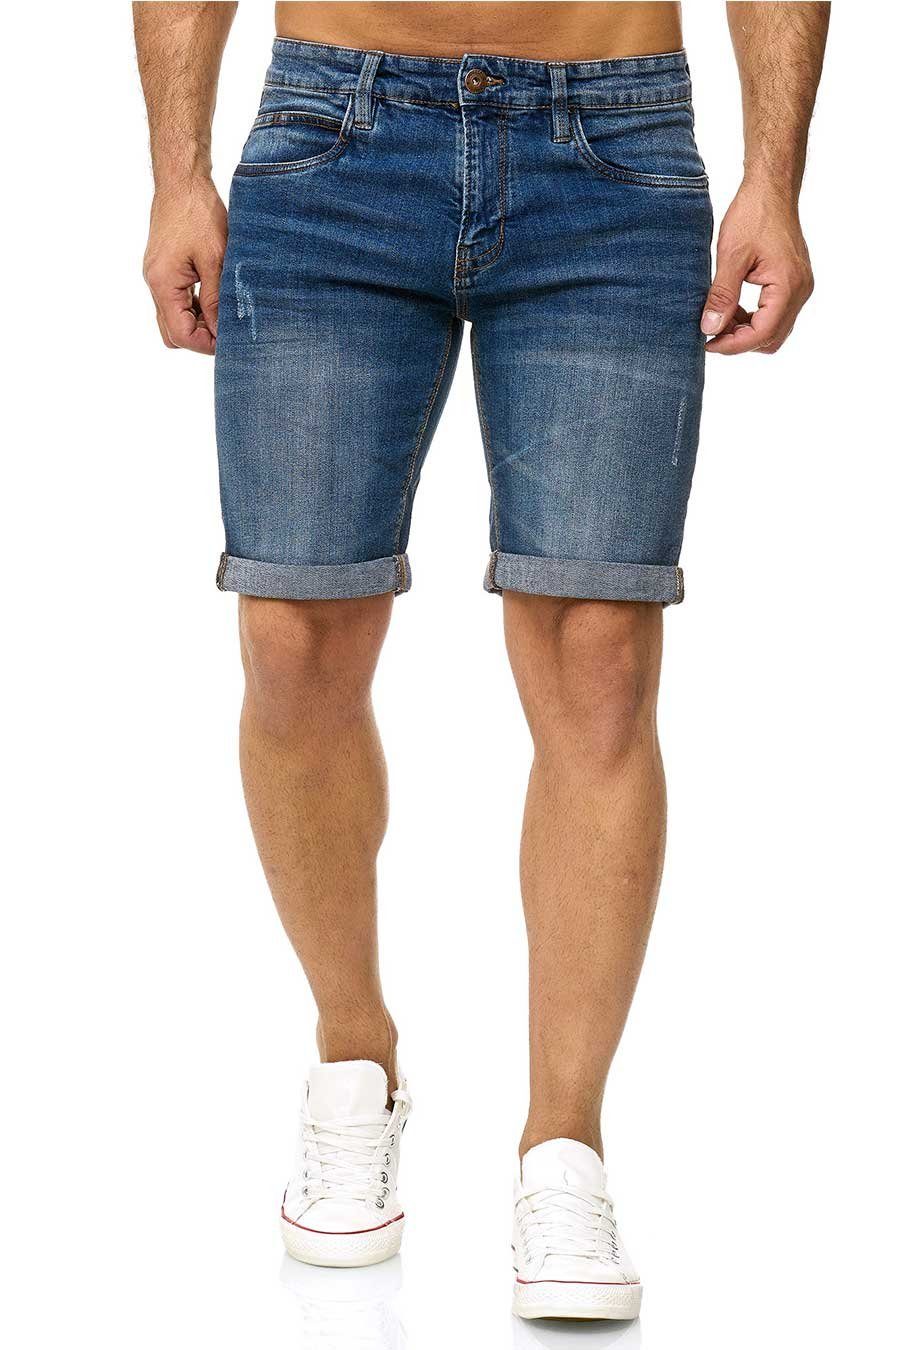 Indicode Shorts Kaden Jeans im Used Look Medium Indigo